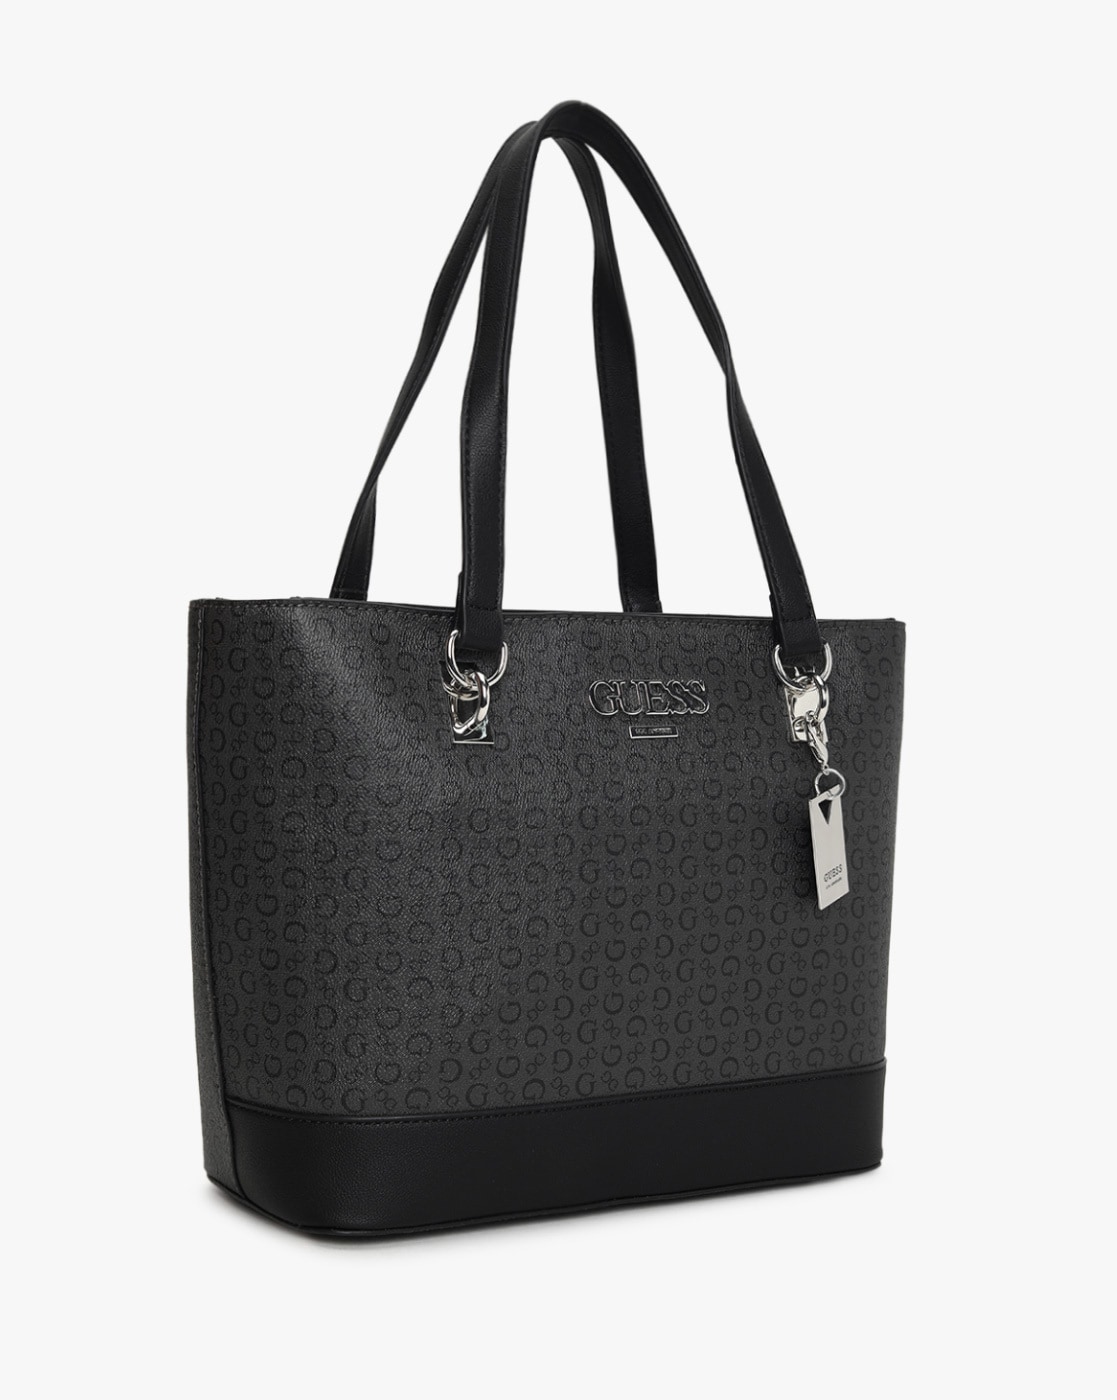 Handbags Guess Bags Sling - Buy Handbags Guess Bags Sling online in India